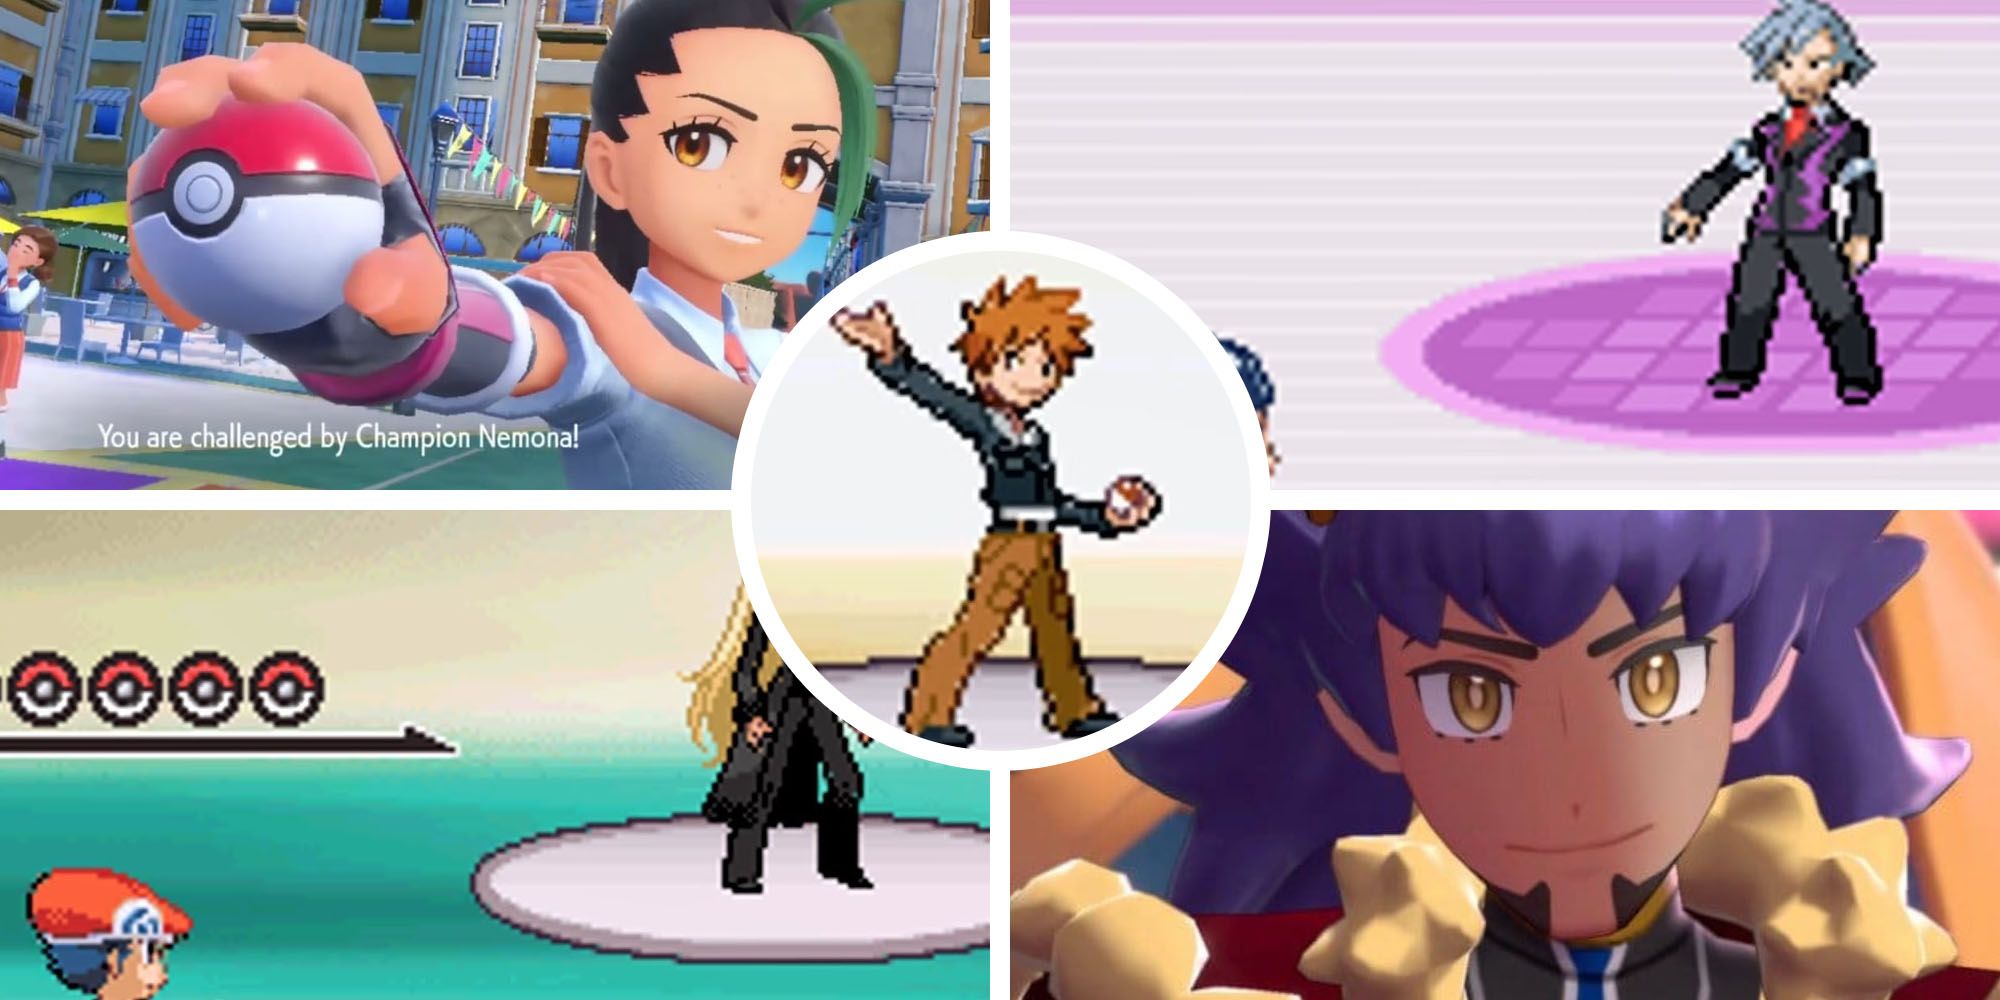 Pokémon Masters' models on X: Pokémon League Champions (Gen 1- 8